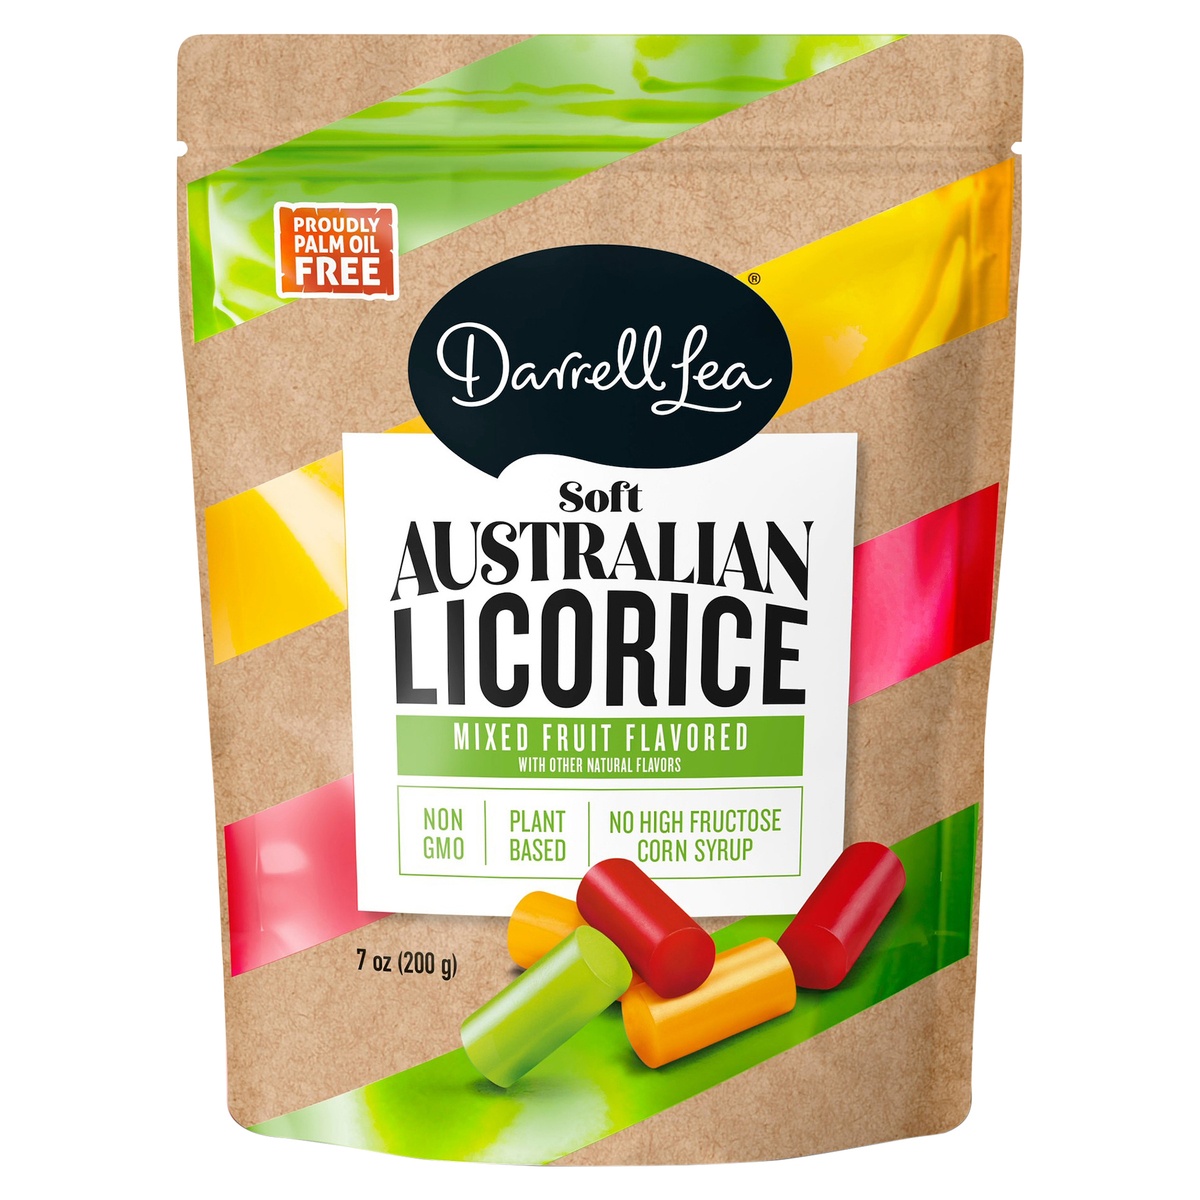 slide 6 of 6, Darrell Lea Liquorice, Australian, Mixed Fruit Flavored, Soft, 7 oz